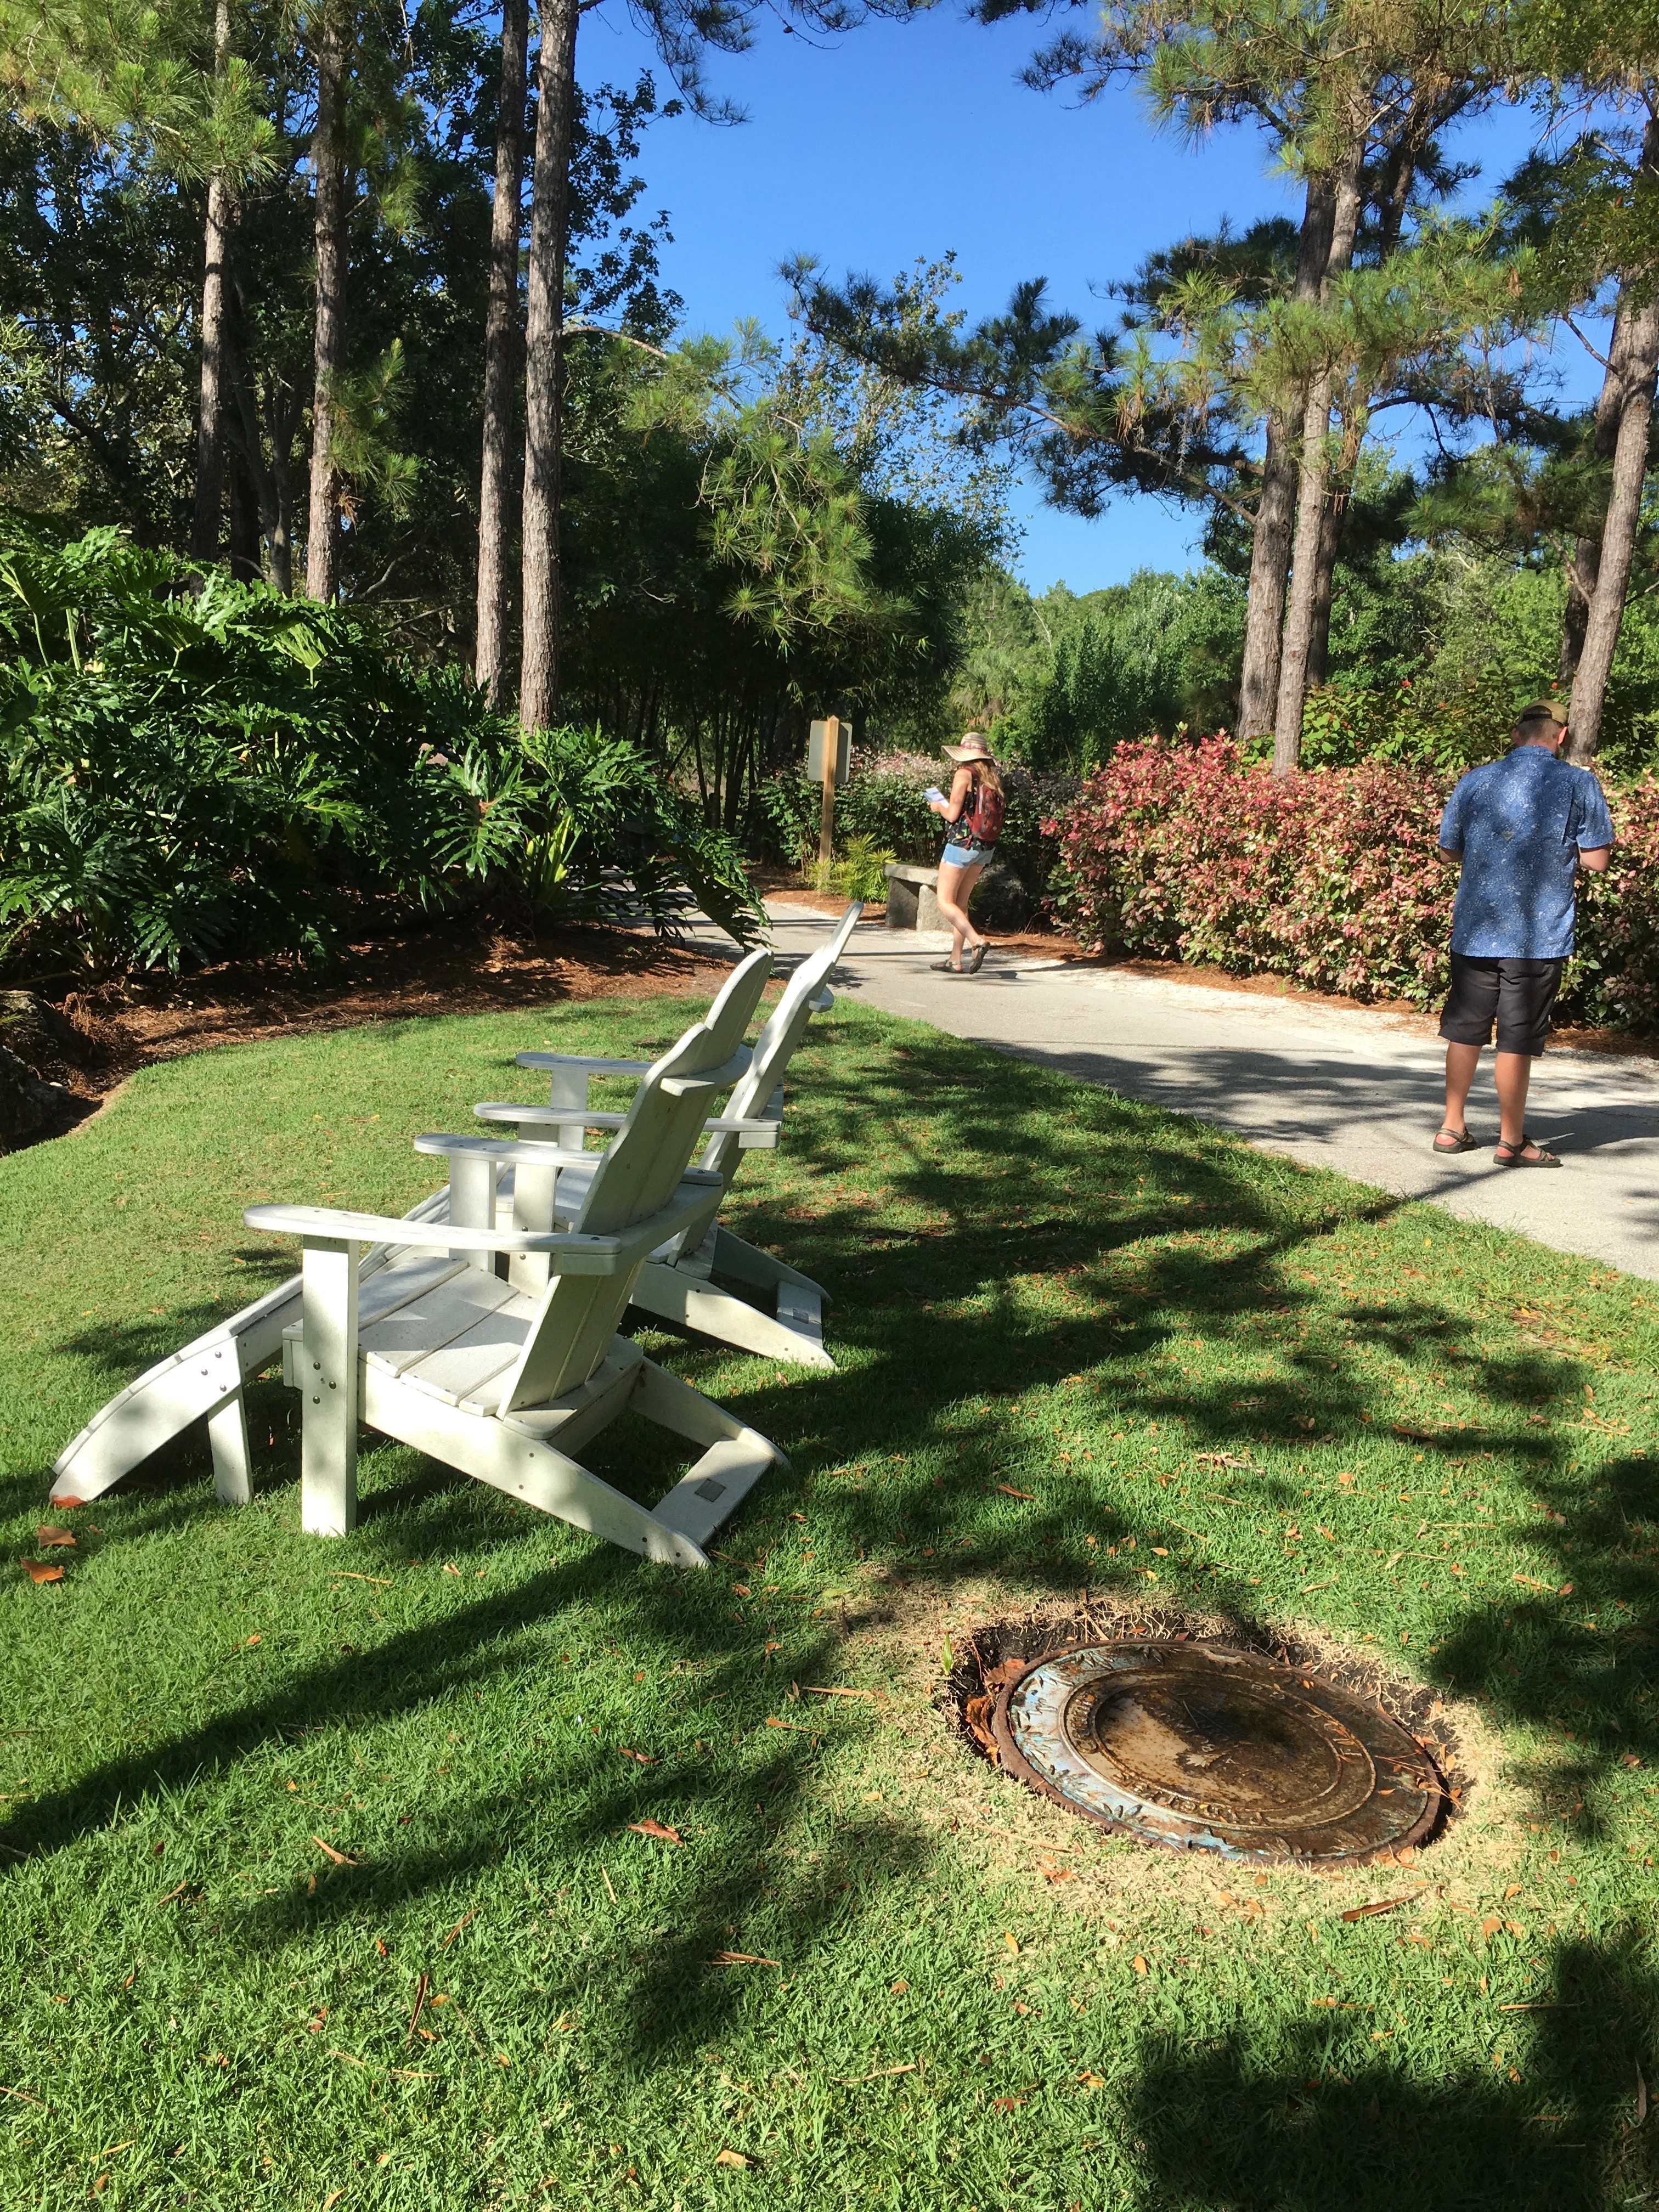 Florida S Botanical Gardens The Backyard Gardener Anr Blogs